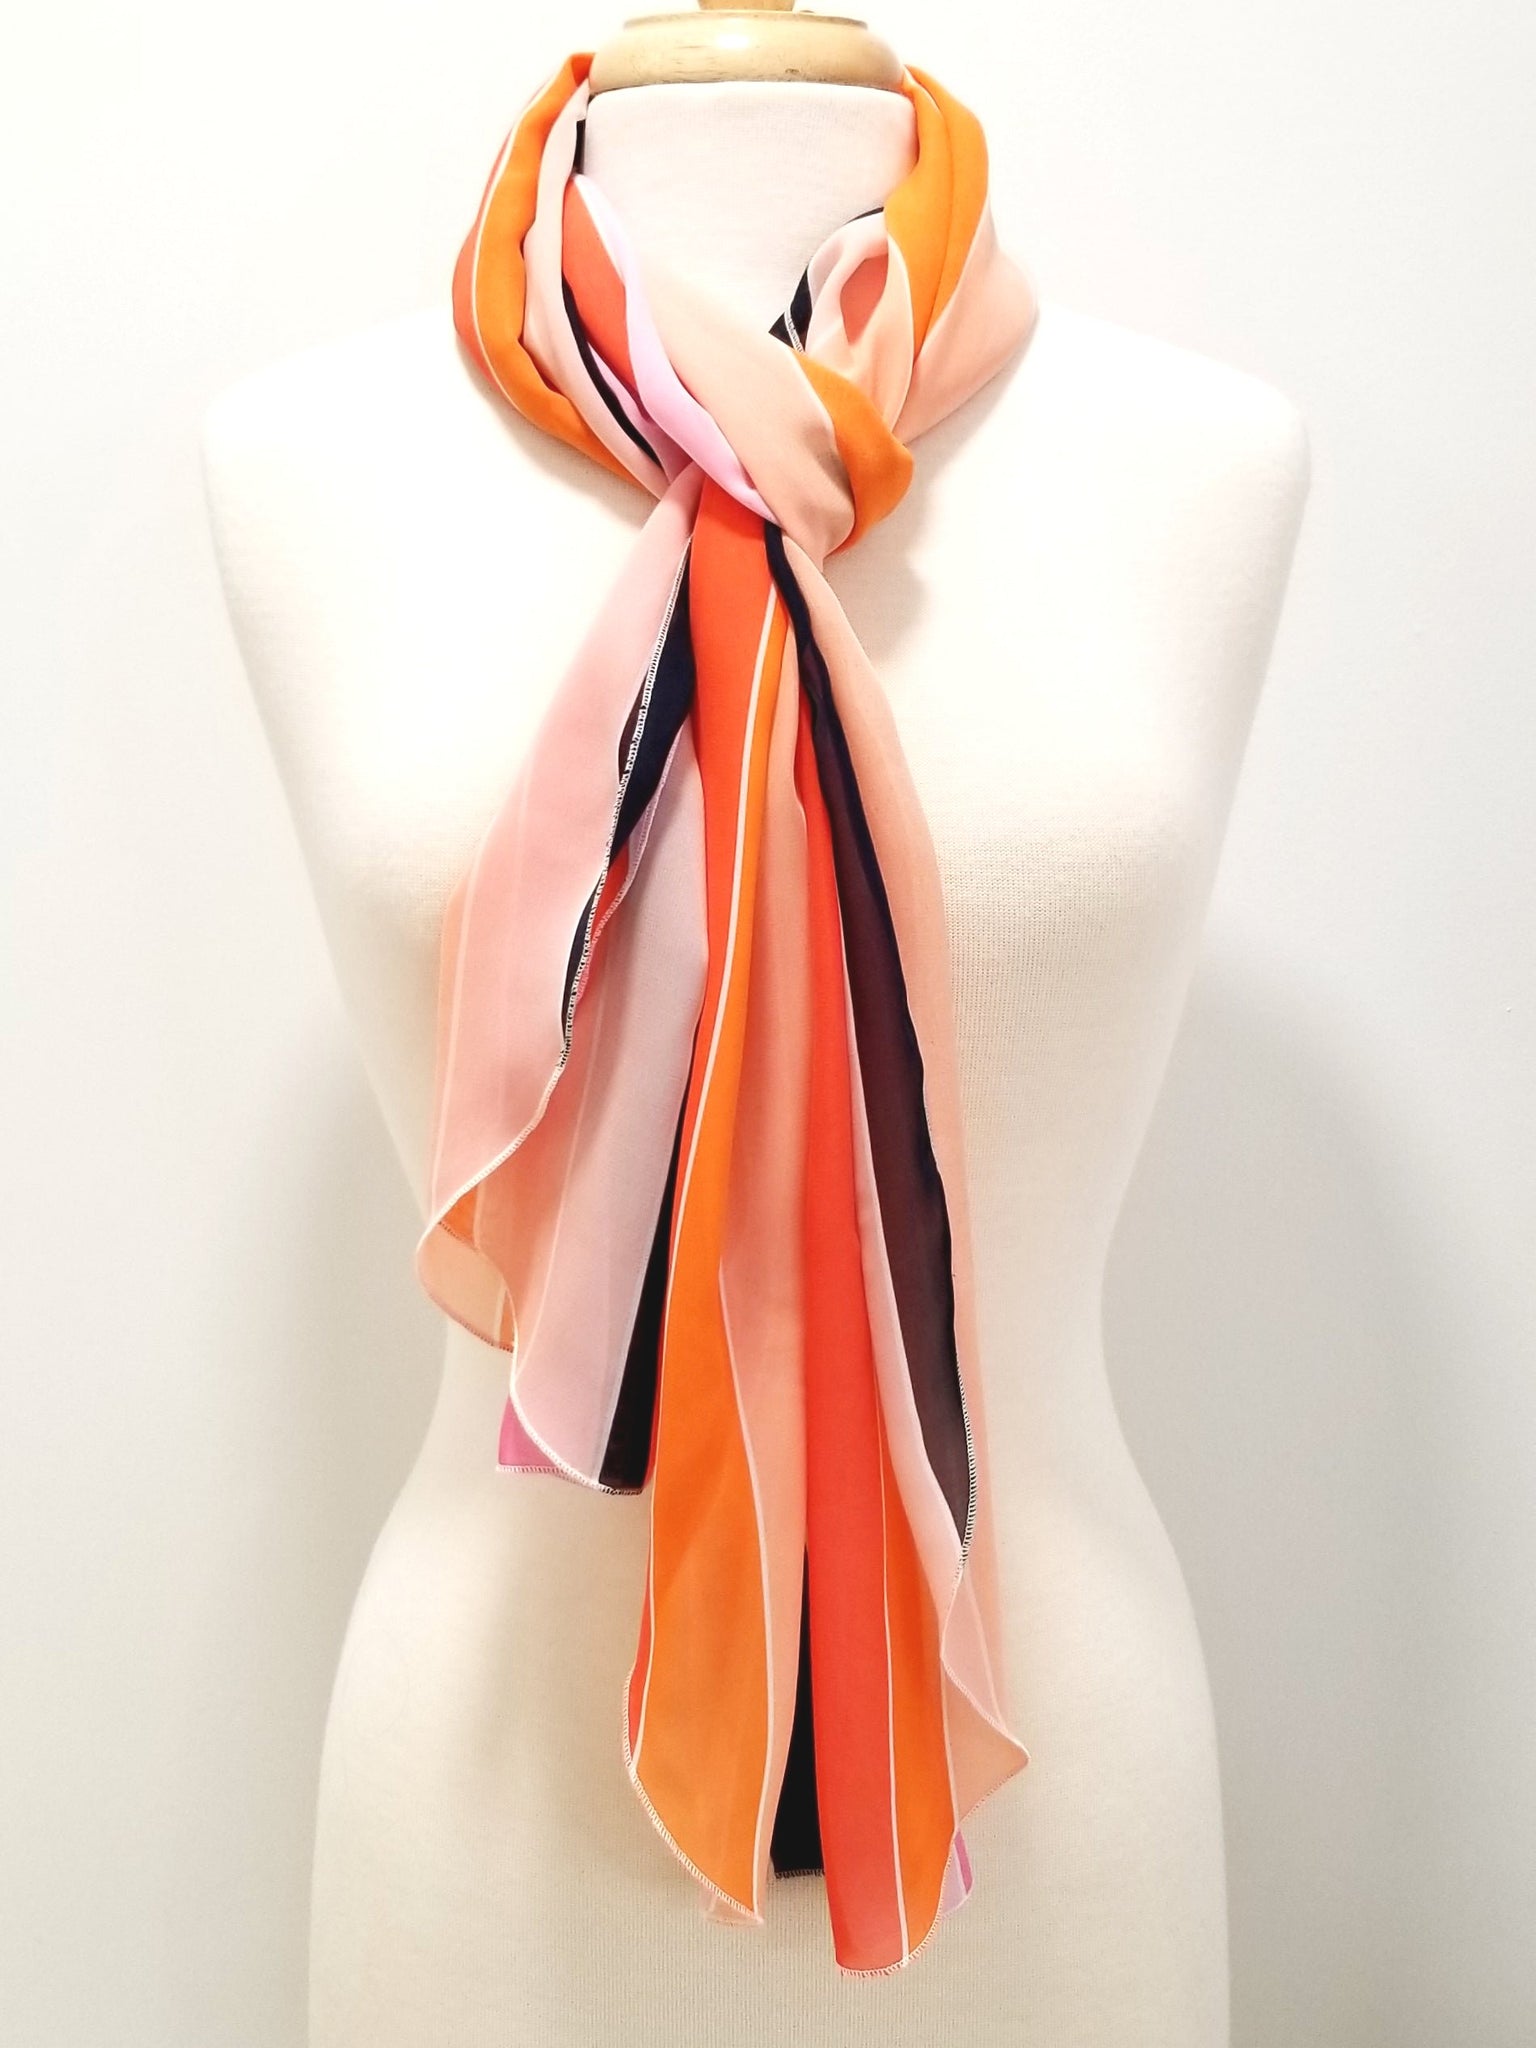 Foulard long à rayures orange, rose et bleu marin